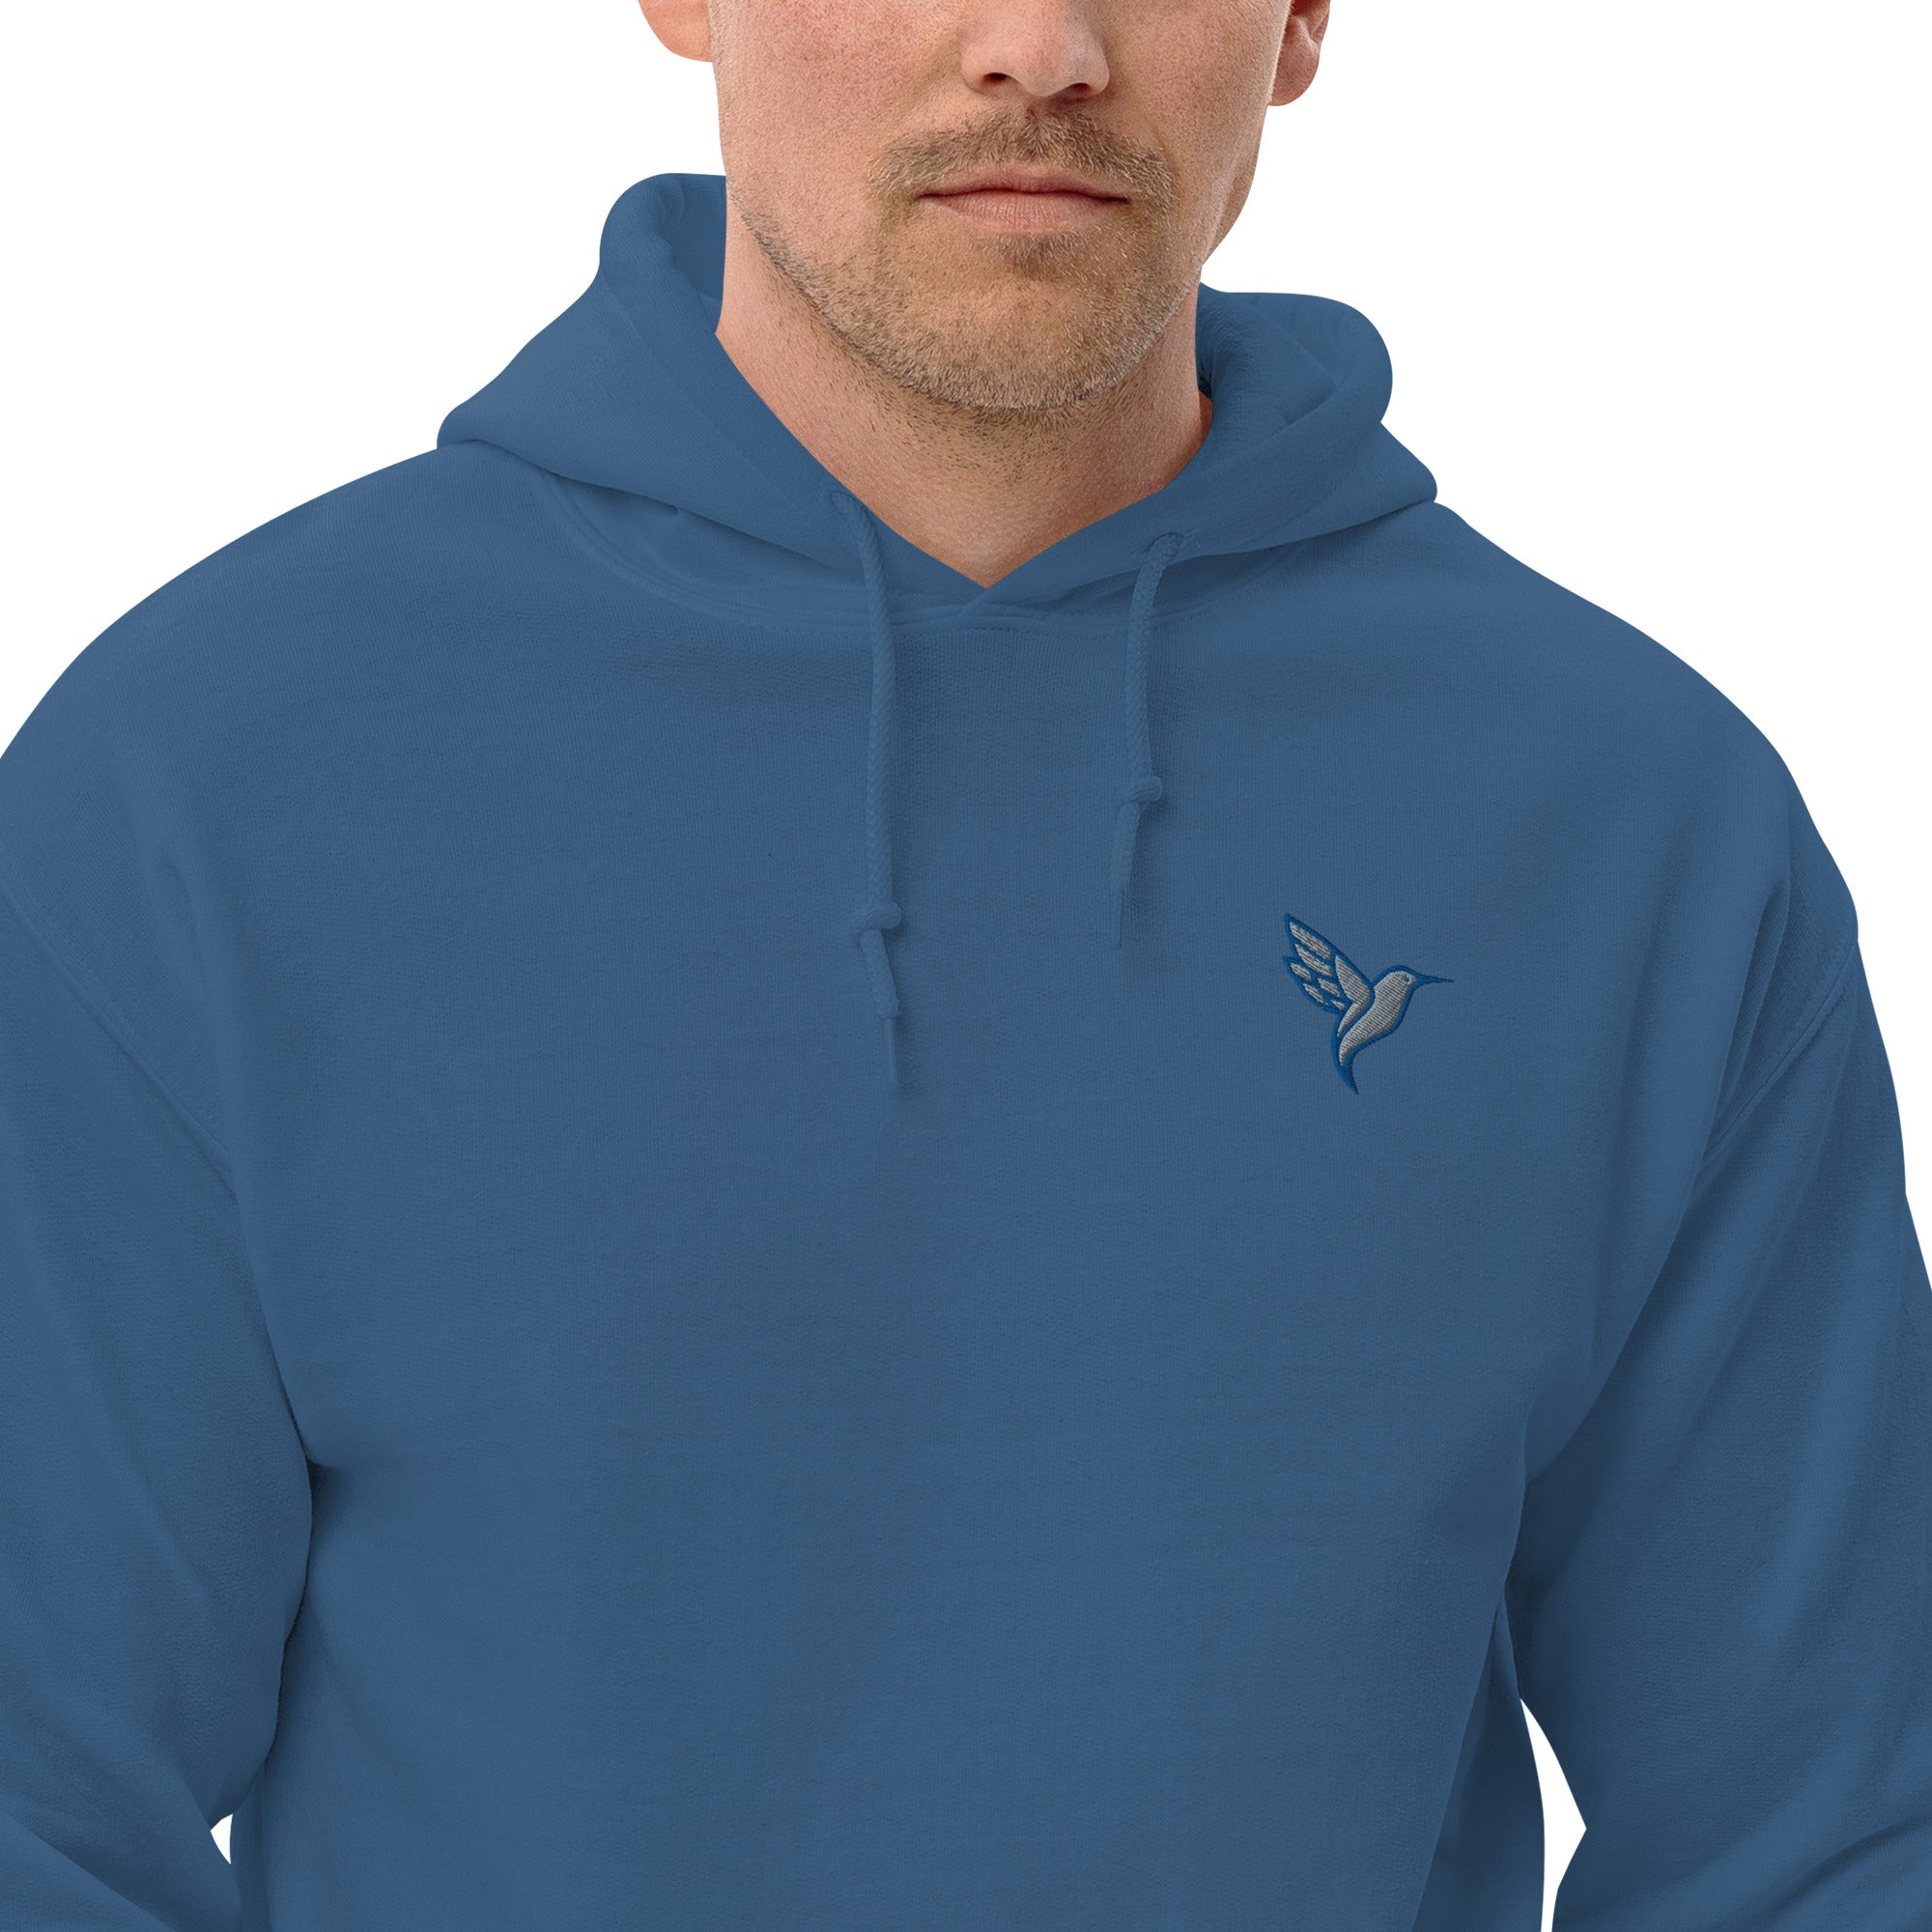 unisex-heavy-blend-hoodie-indigo-blue-zoomed-in-65e8c47af25a3.jpg